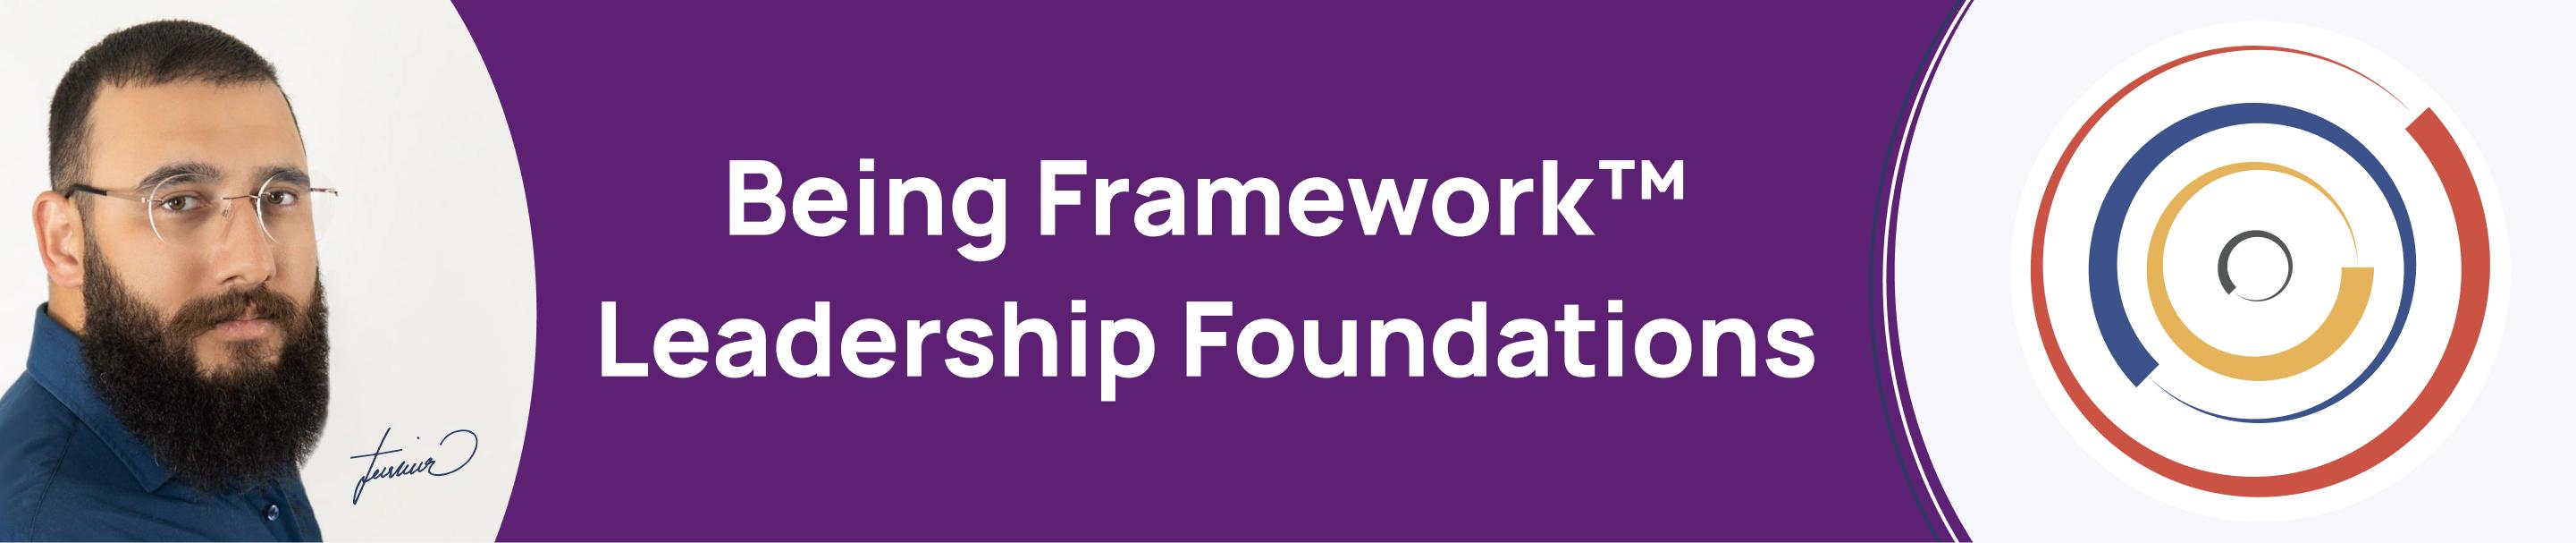 Being Framework™ Leadership Foundations